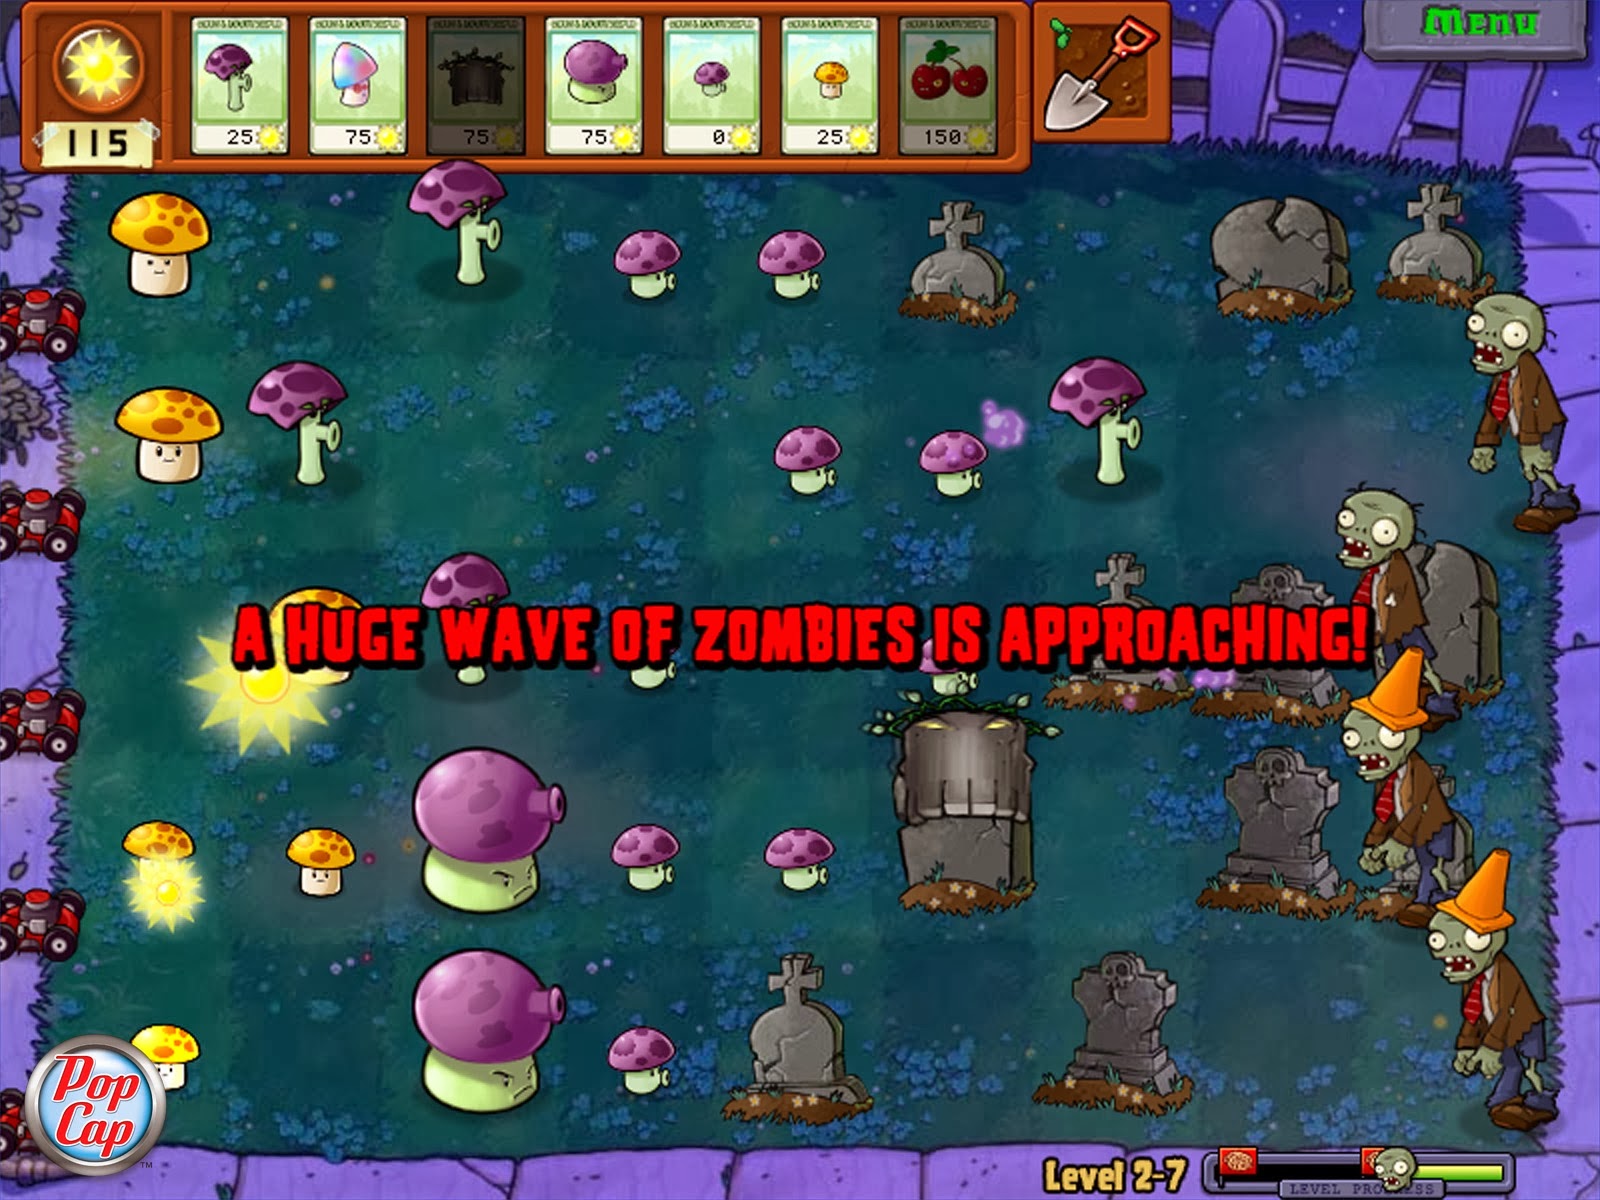 plants vs zombies game